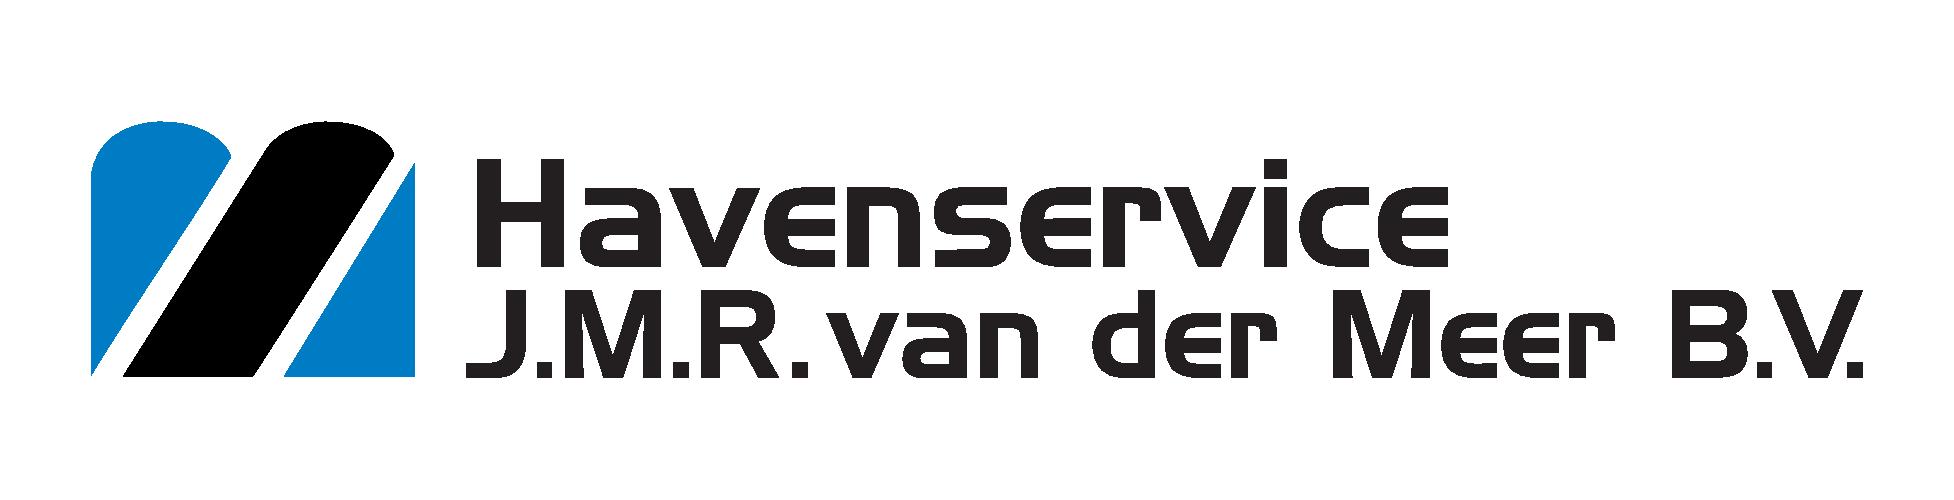 Havenservice Logo